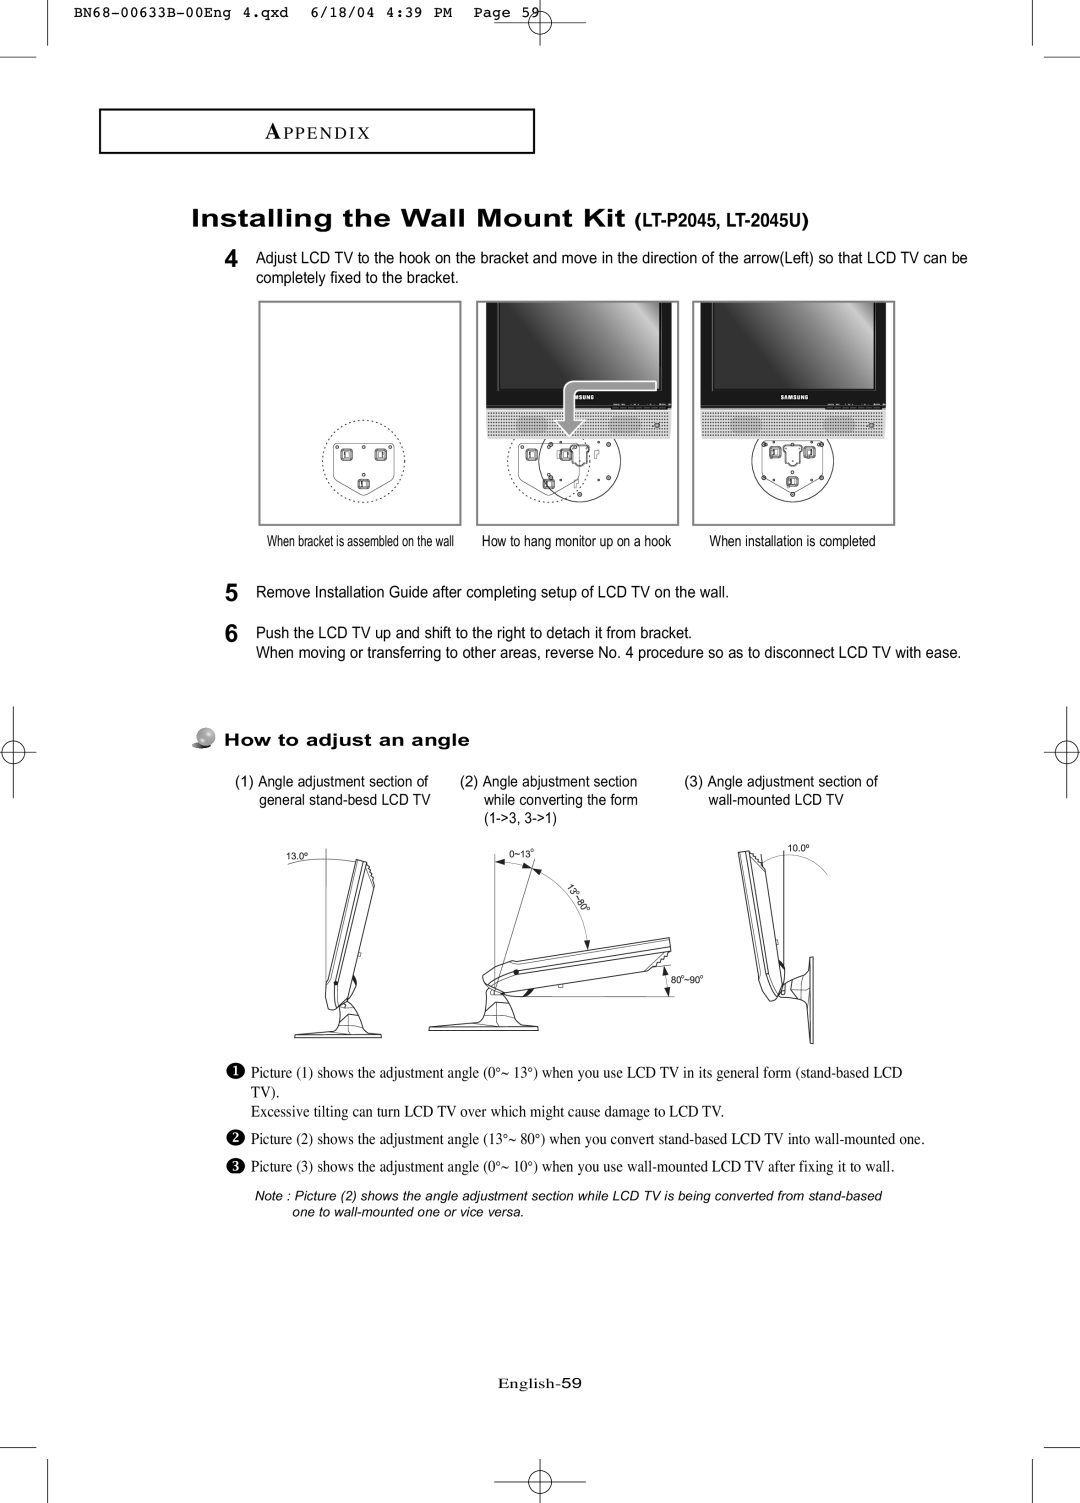 Samsung LT-P1545 manual Installing the Wall Mount Kit LT-P2045, LT-2045U, A P P E N D I, How to adjust an angle, English-59 